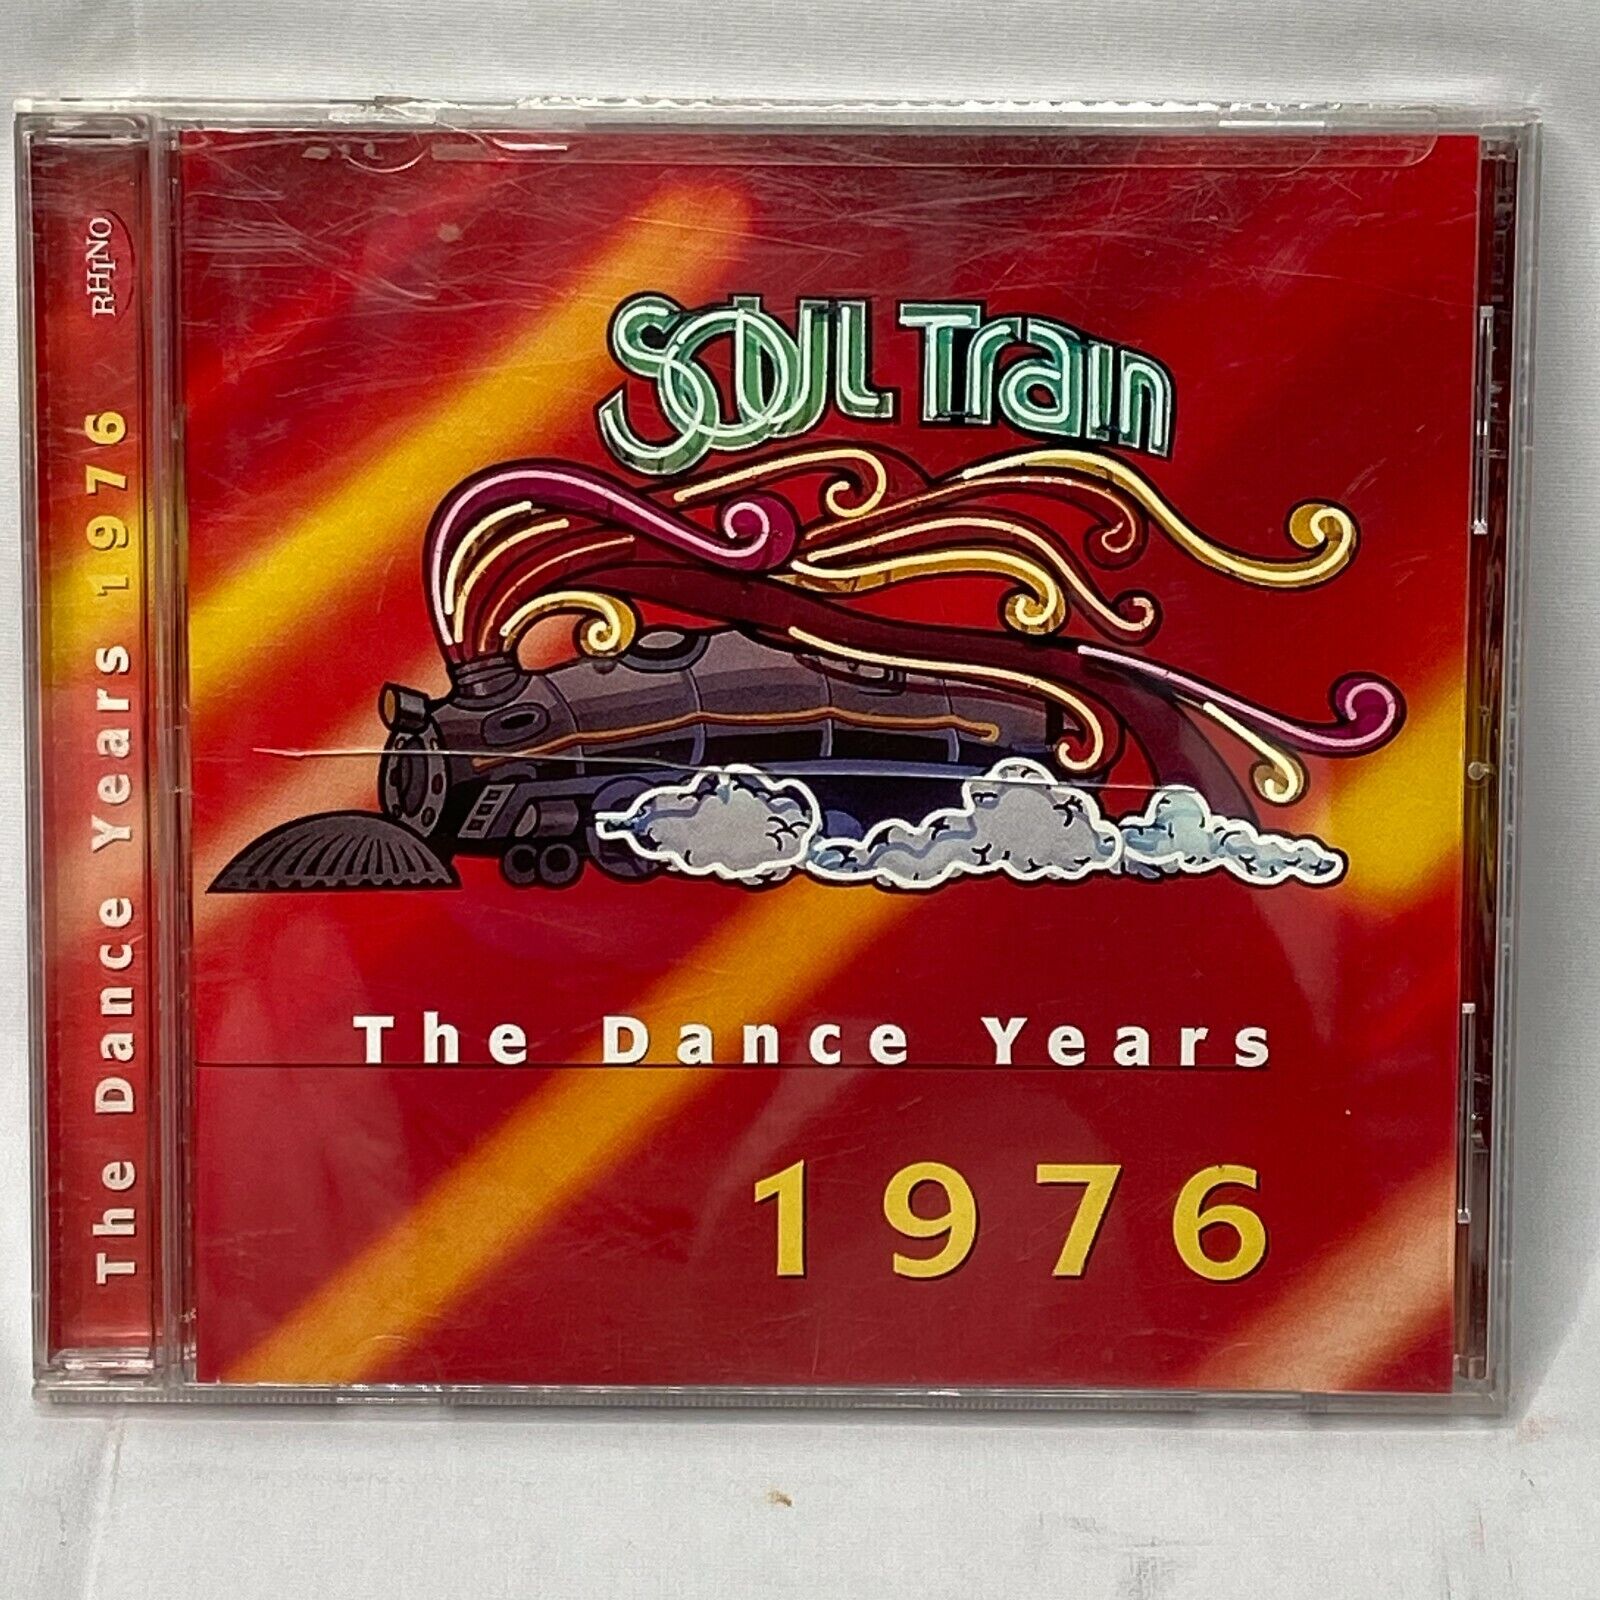 Soul Train The Dance Years 1976 30th Anniversary Collectors Series CD RARE VTG